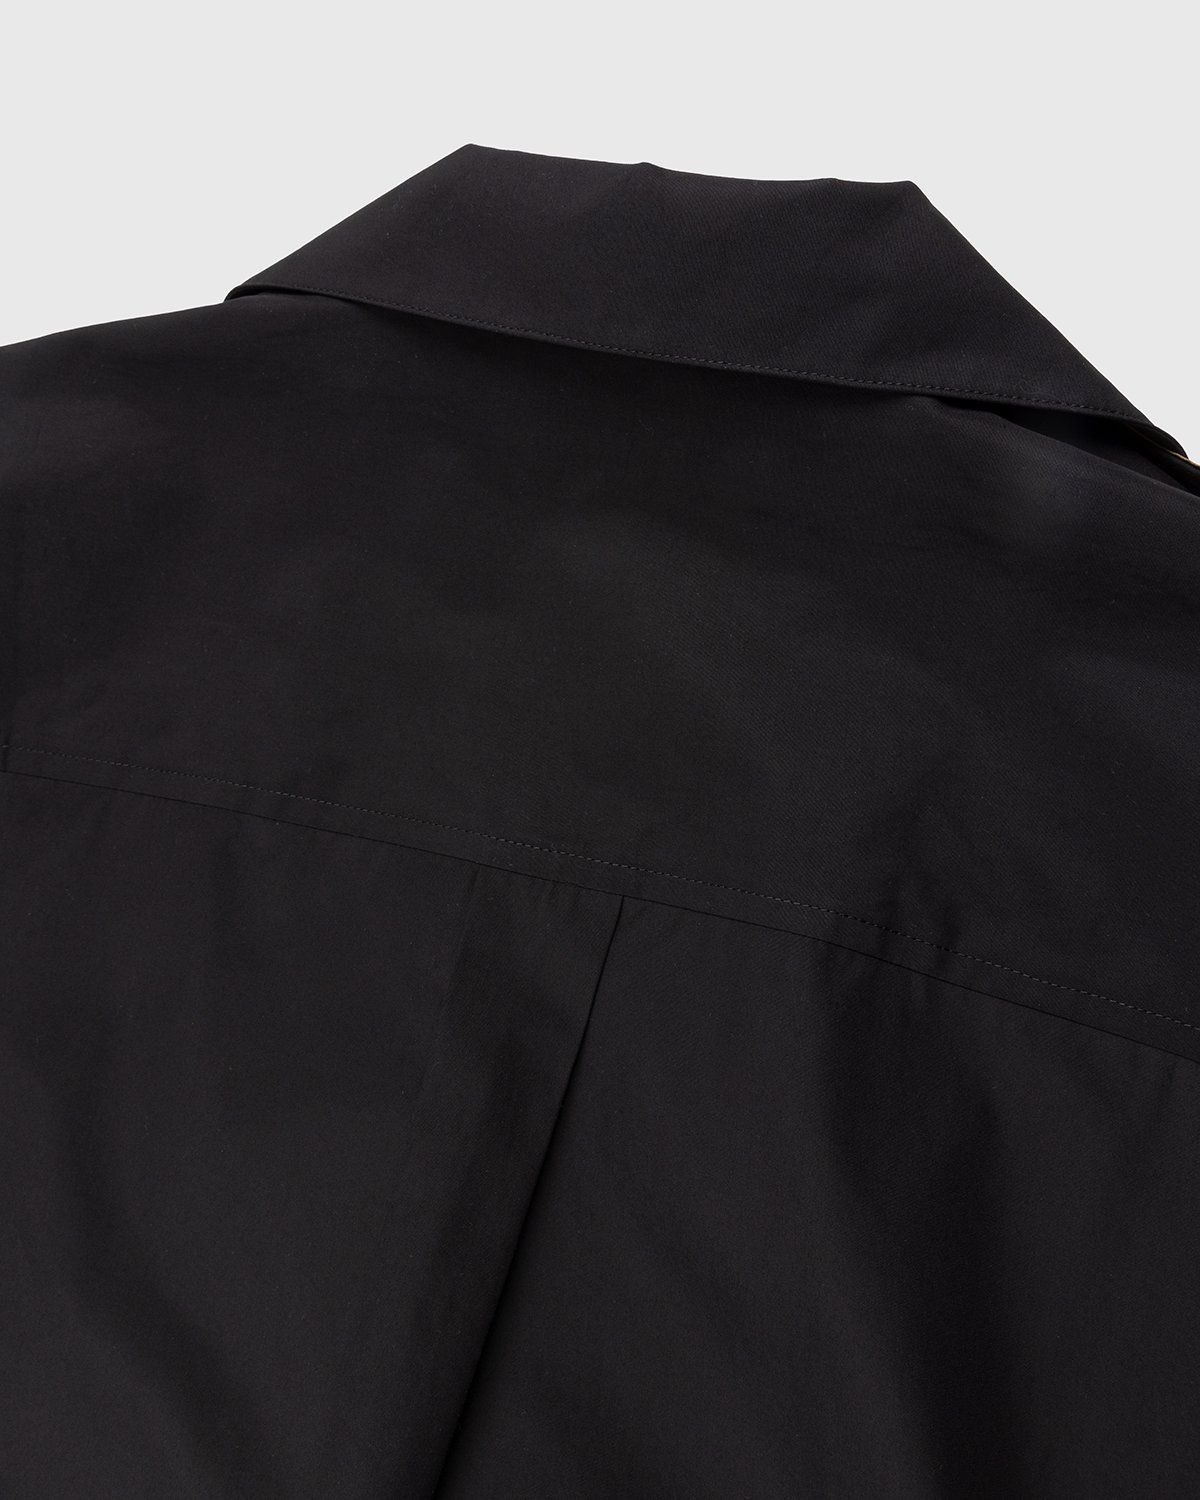 Marni – 50s Camo Mixed Material Bowling Shirt Soft Beige - Shortsleeve Shirts - Beige - Image 3